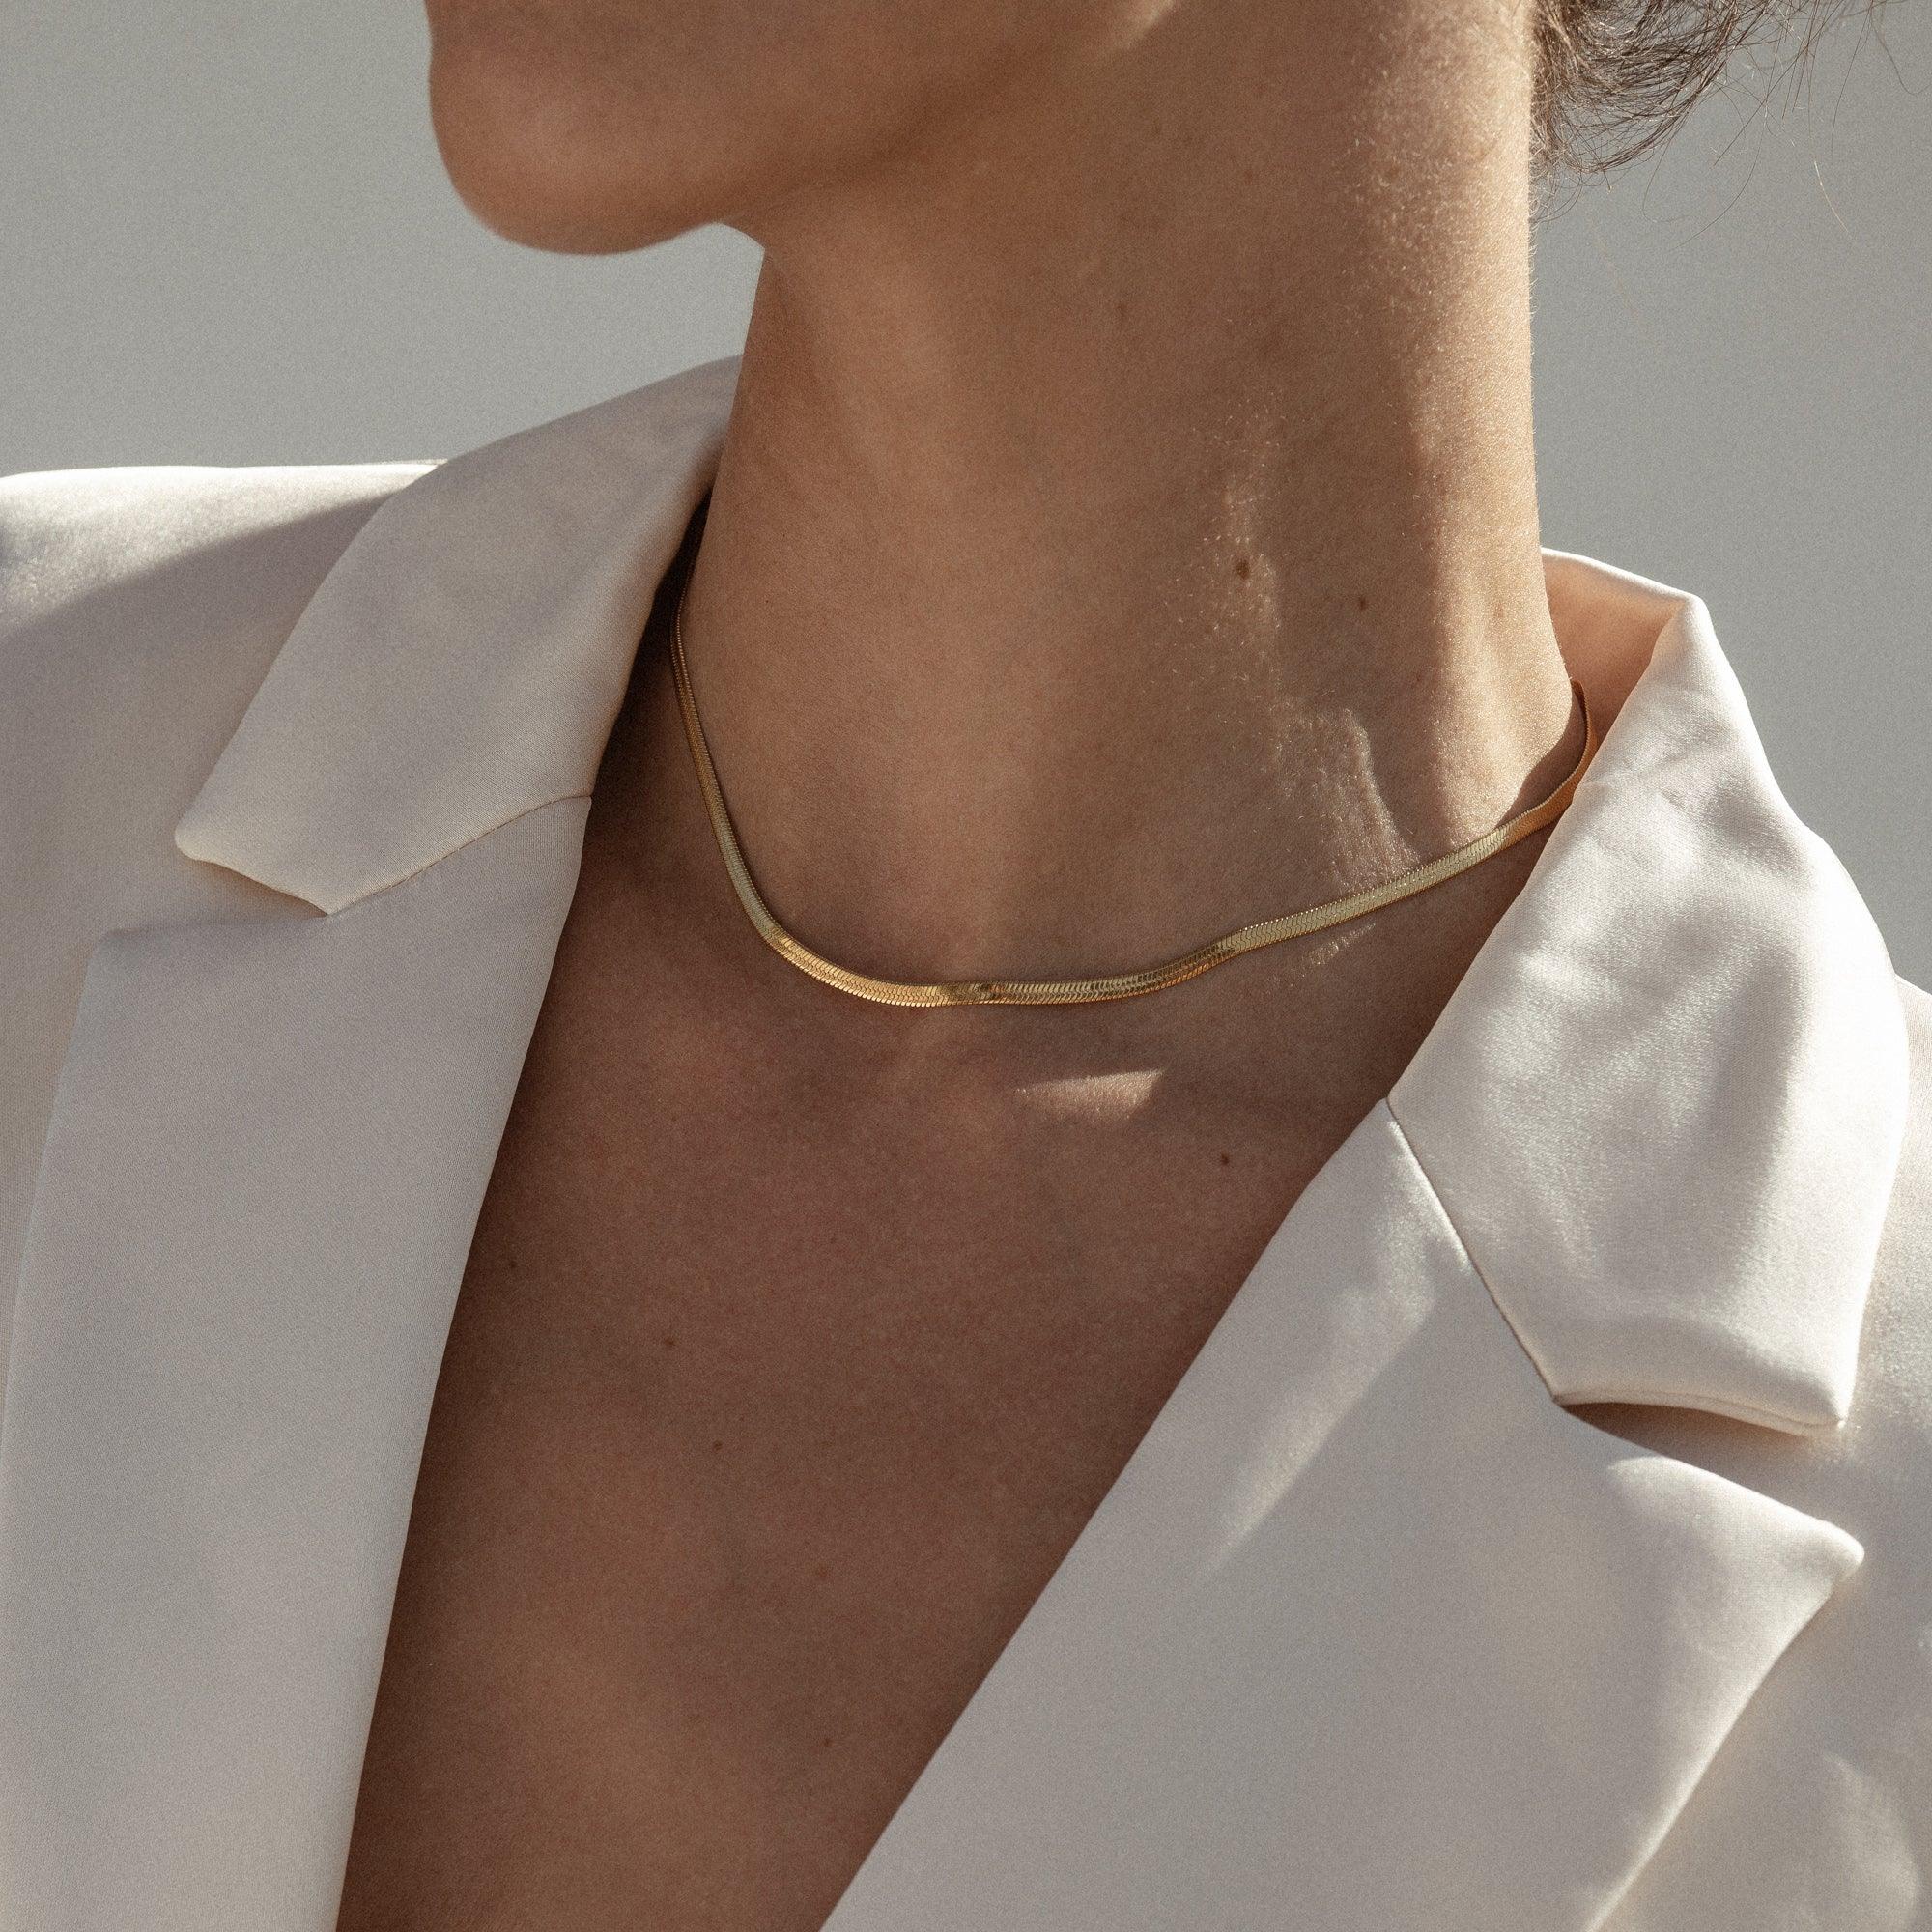 Kendra Snake Chain 14k Gold Necklace - ELLA PALM